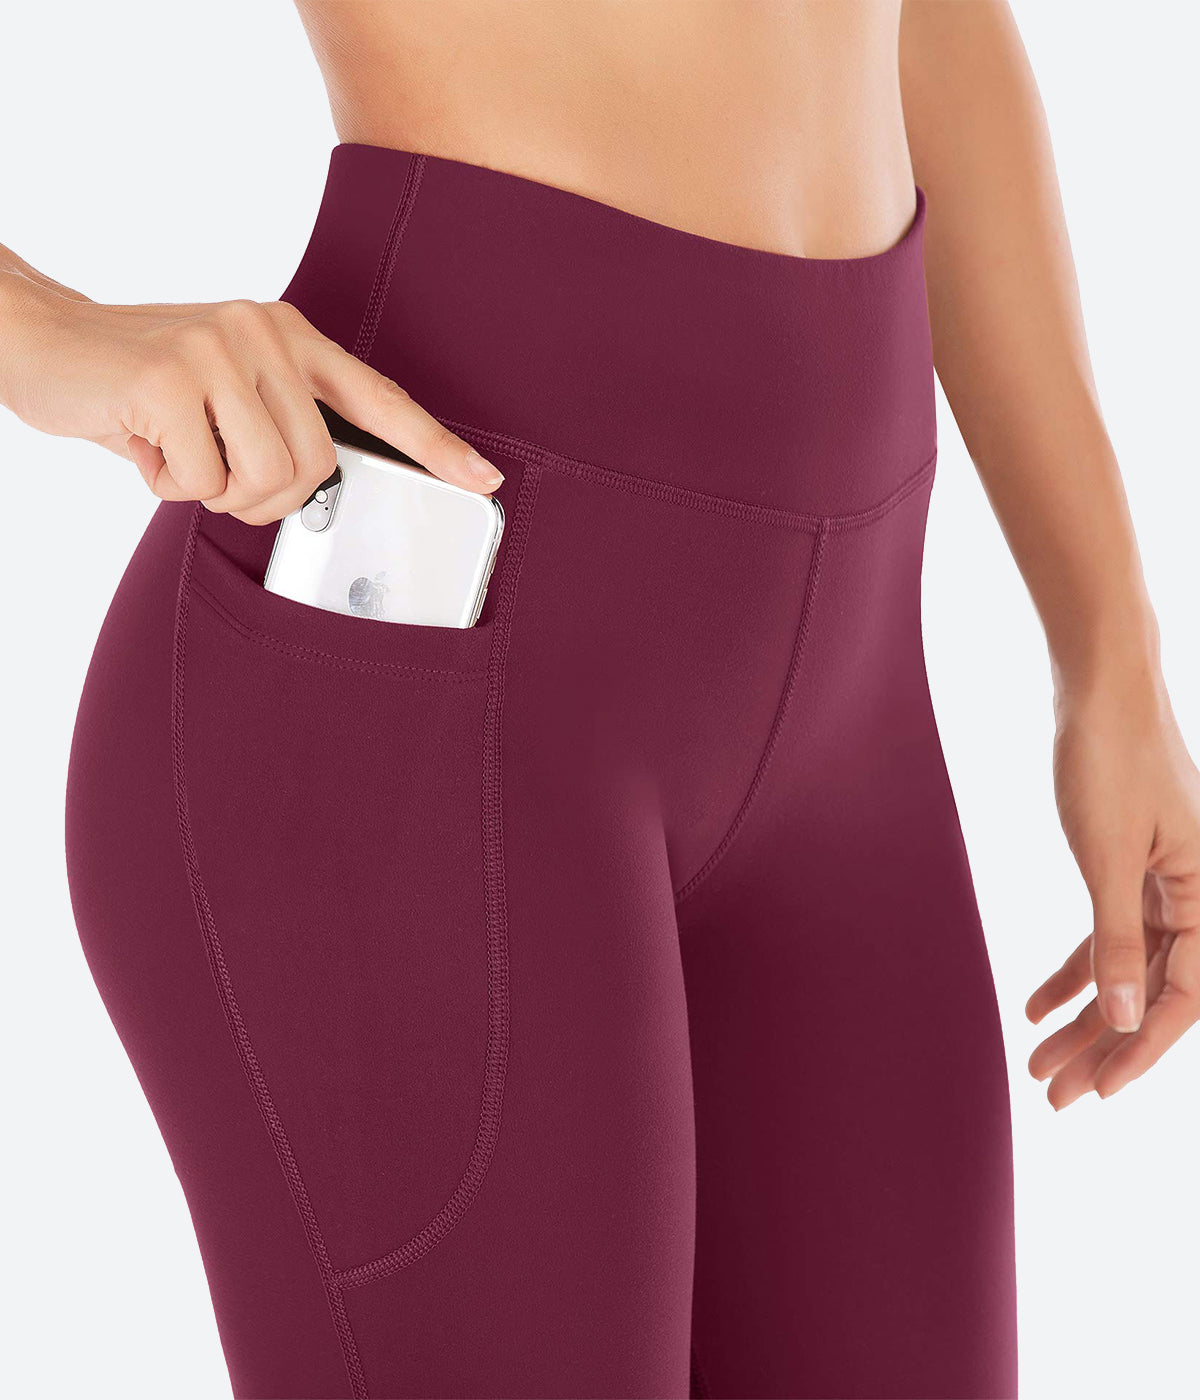 YAZI Yoga Pants with Pockets for Women High Waist Workout Bootleg